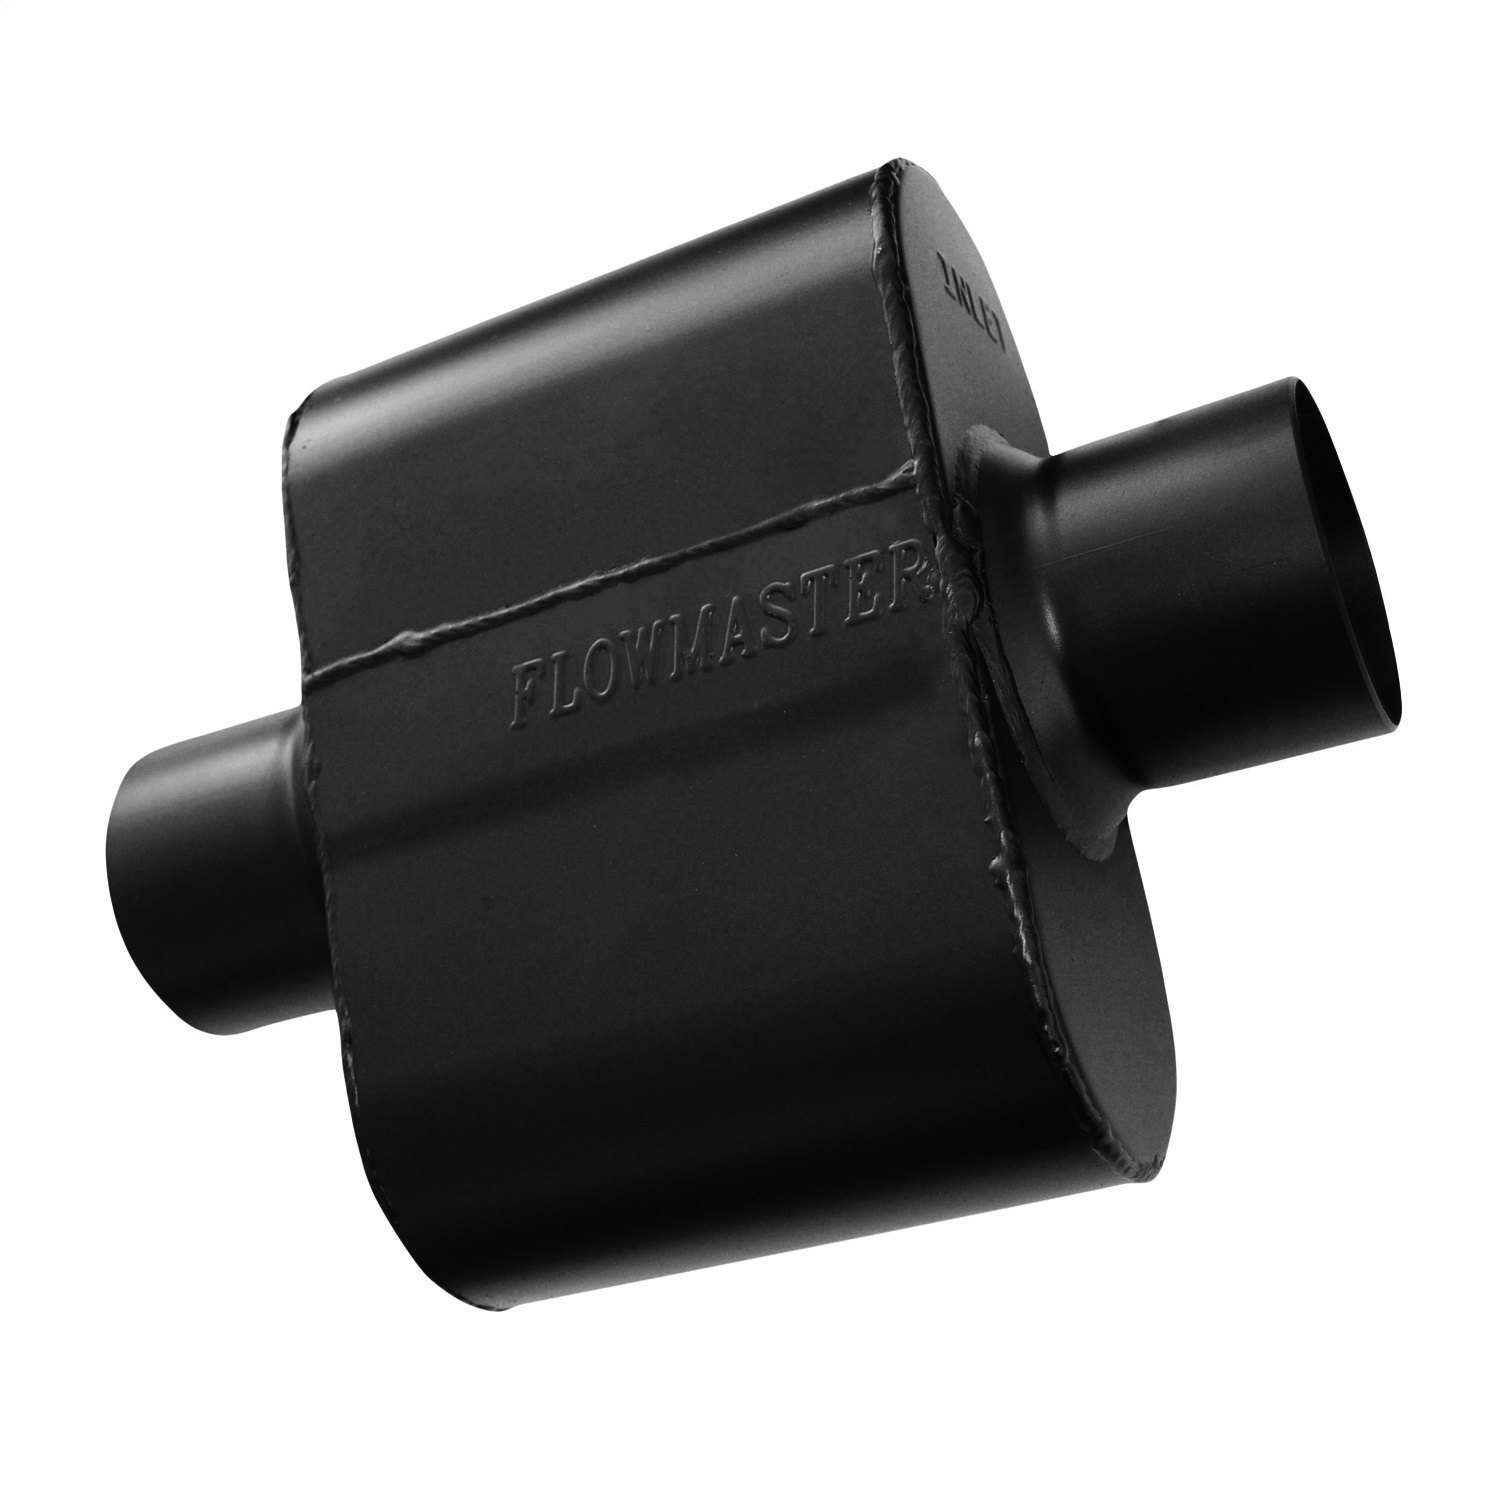 Flowmaster Flowmaster 843015 Super 10 Series Muffler